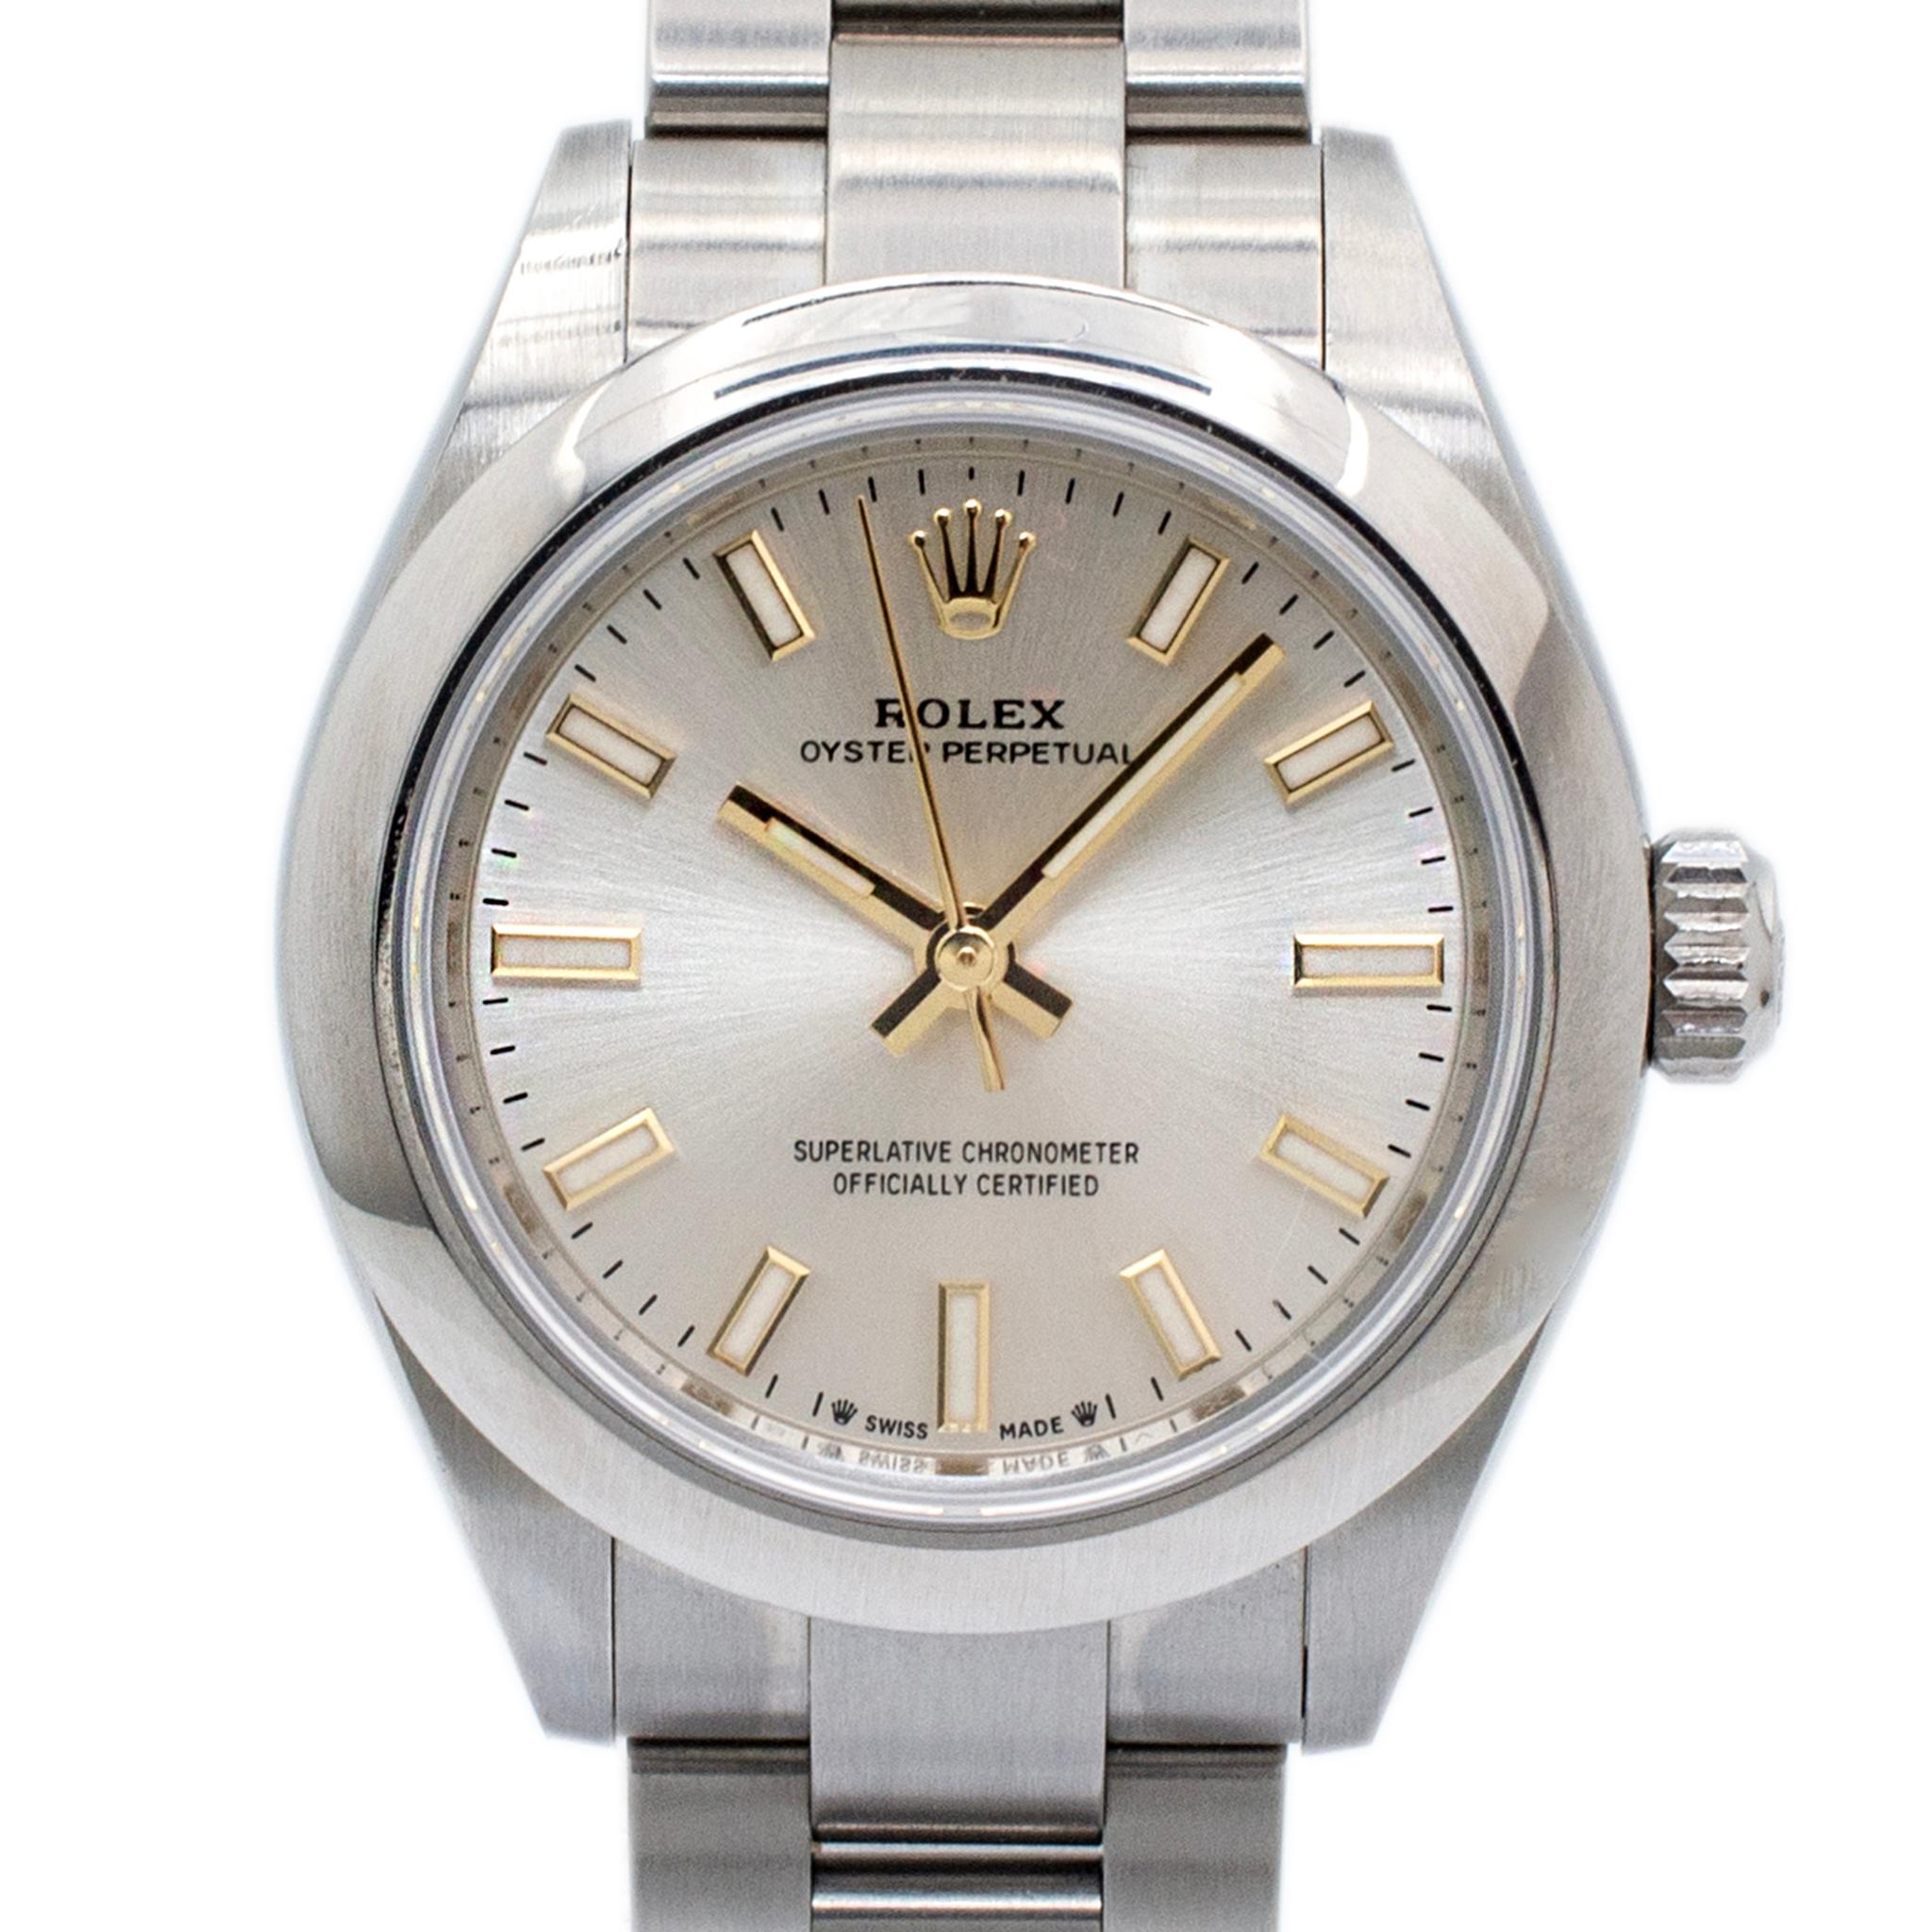 Brand: Rolex
Case Diameter: 28mm
Total Weight: 76.78 grams

Ladies stainless steel, Rolex Swiss watch. The 